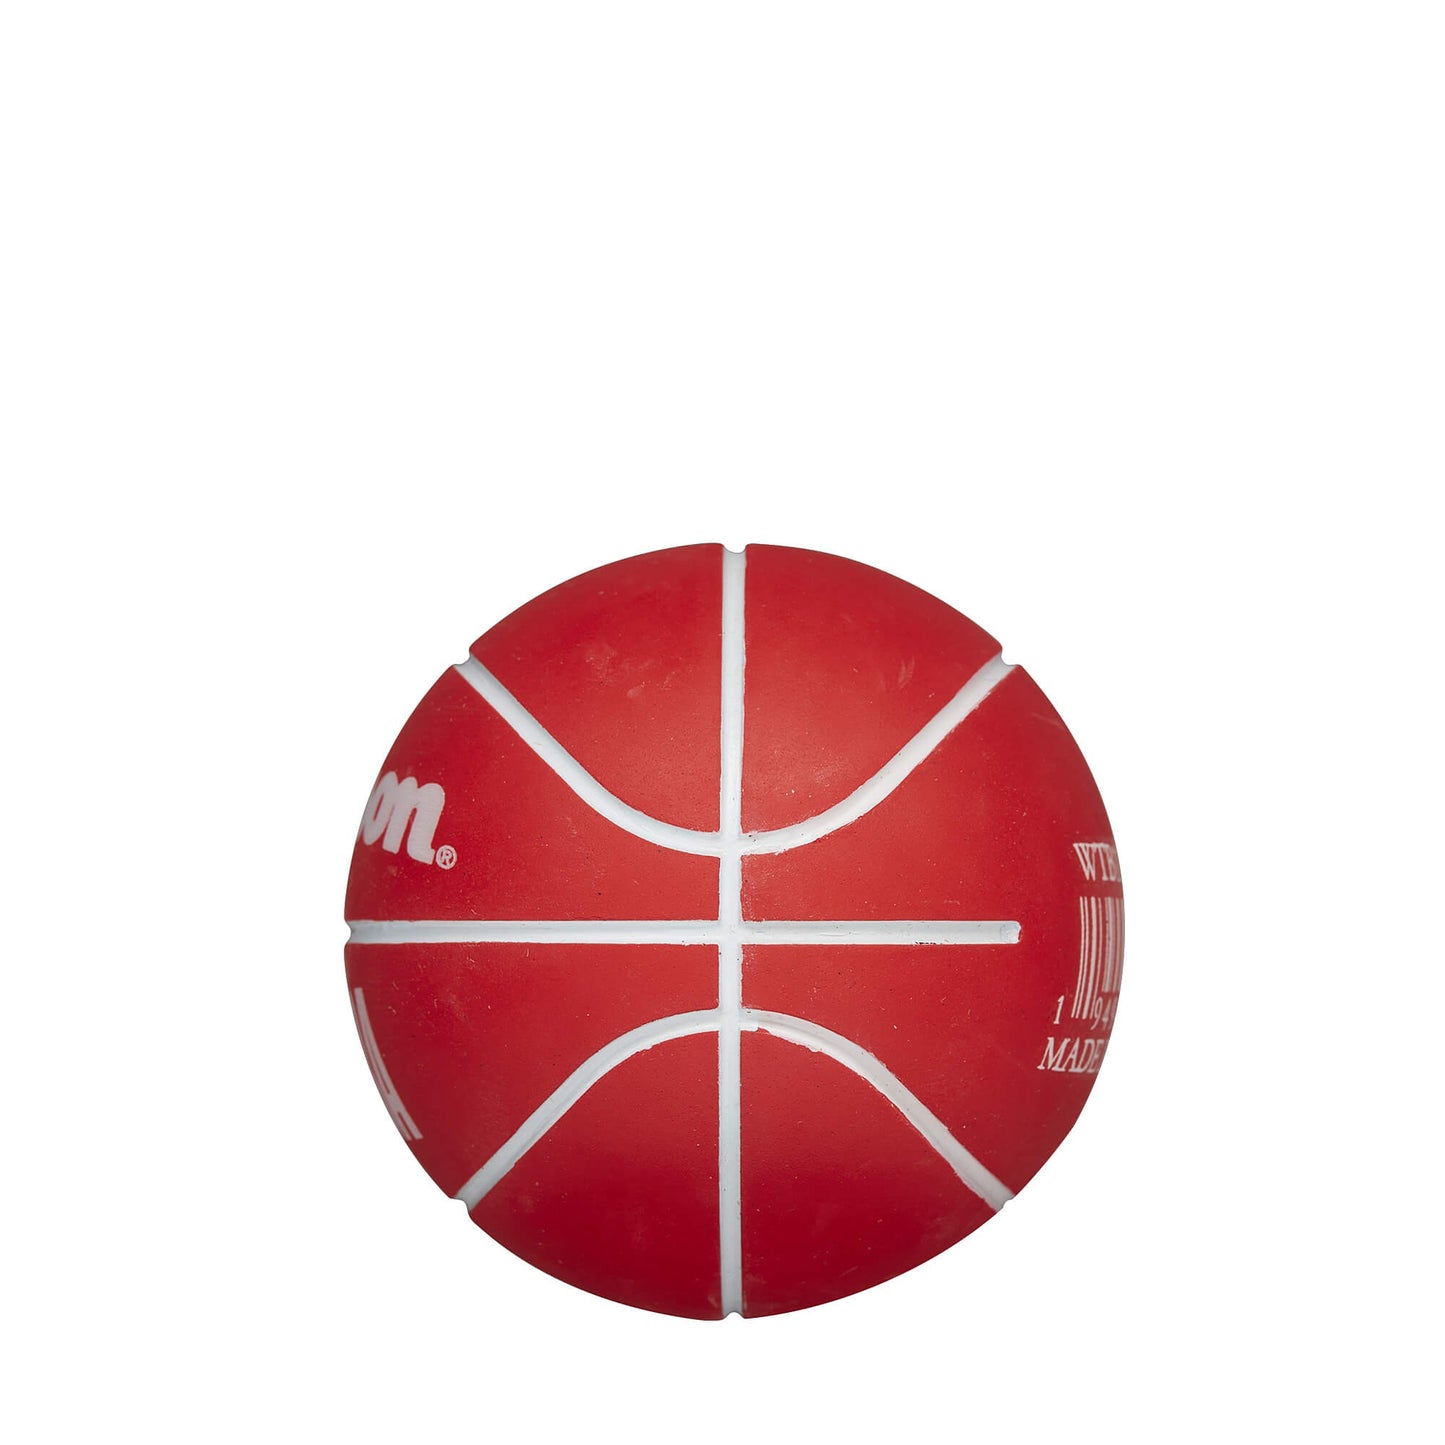 Wilson NBA Dribbler Basketball (sz. super mini) Red